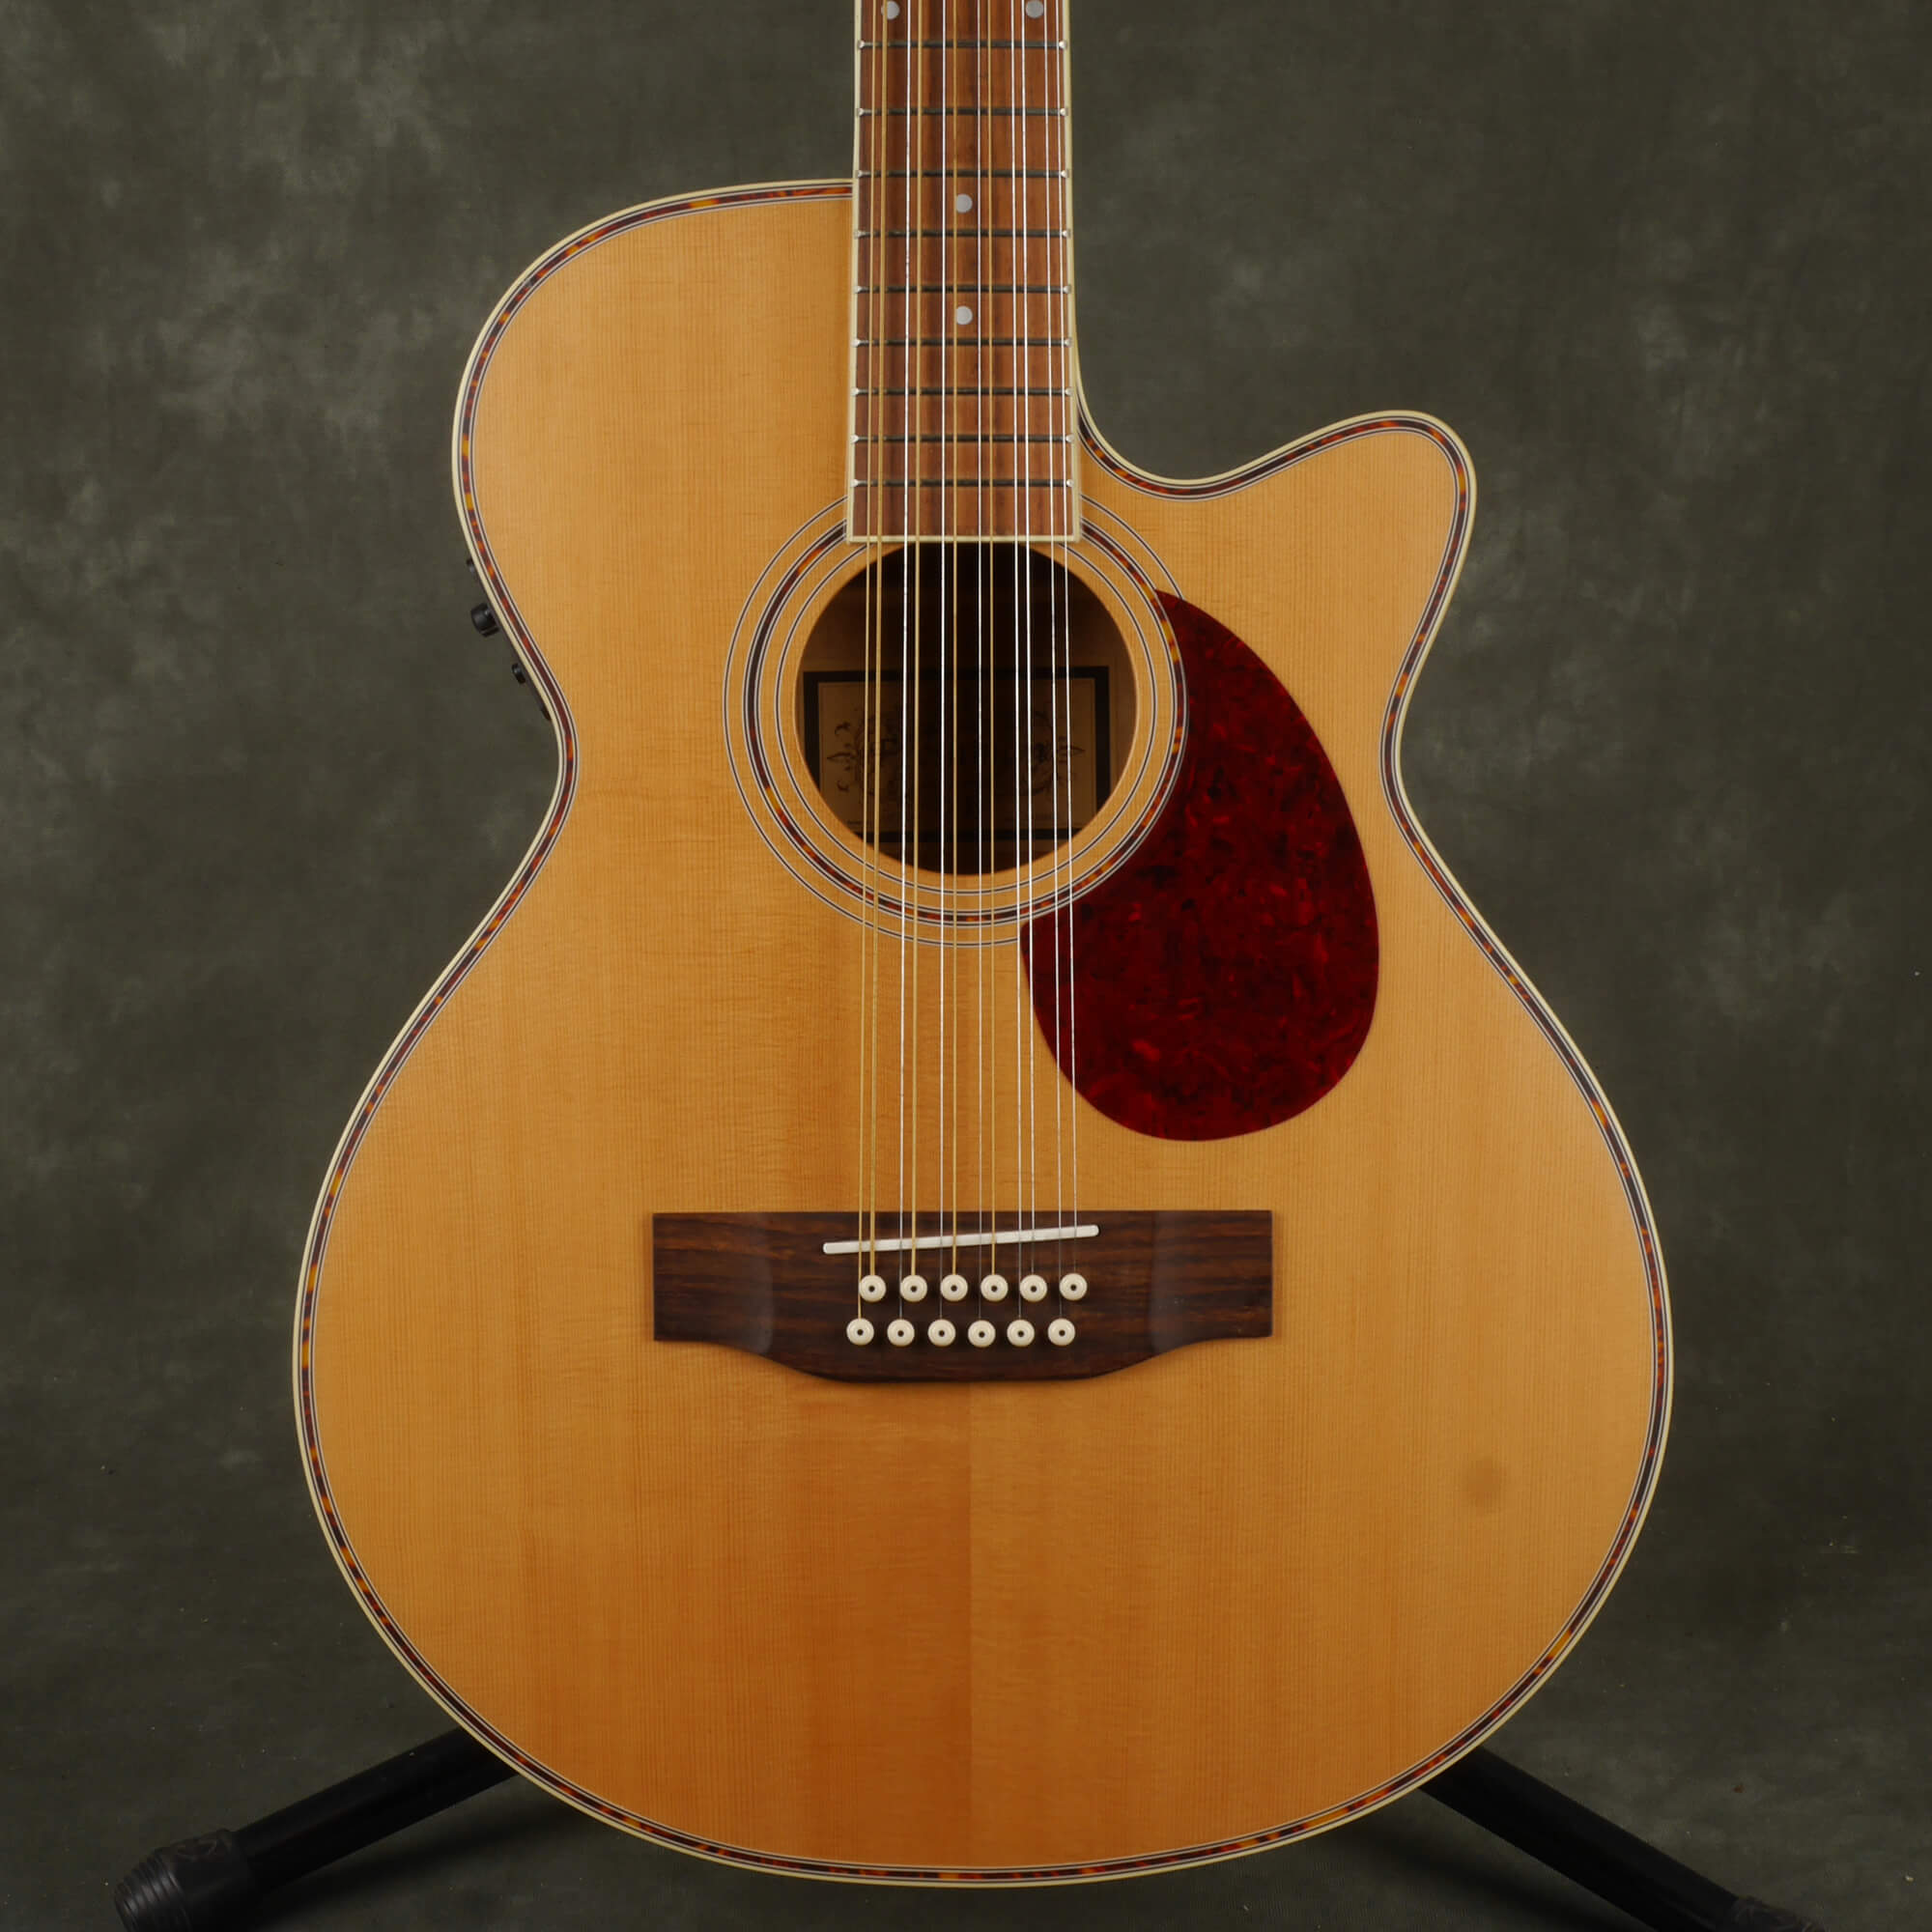 egmond acoustic guitar serial number 76210147